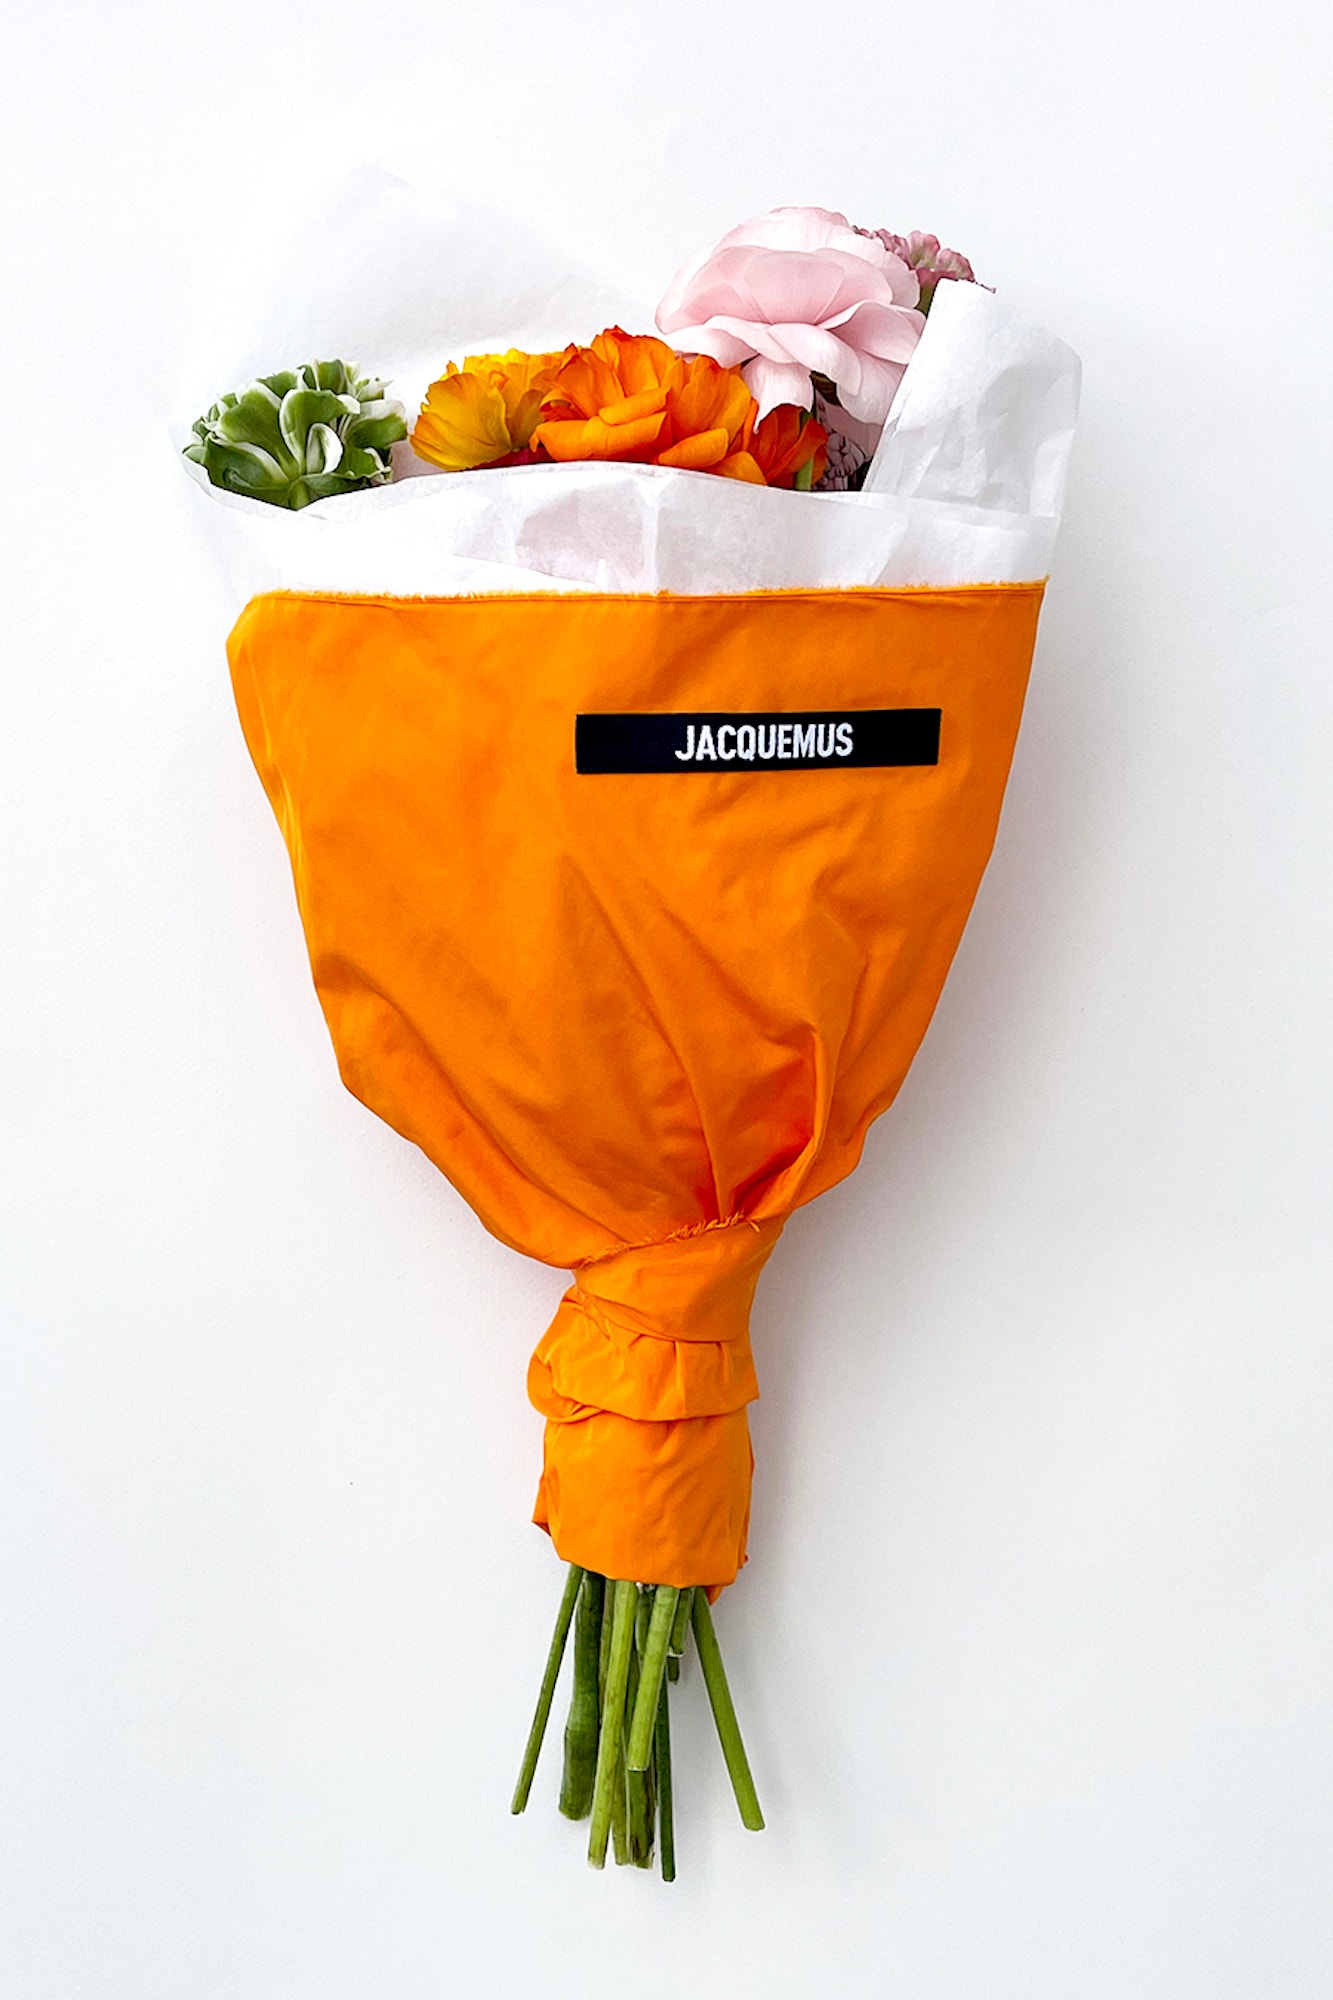 Jacquemus Opens Flower Shop Pop-Up Location | Hypebae